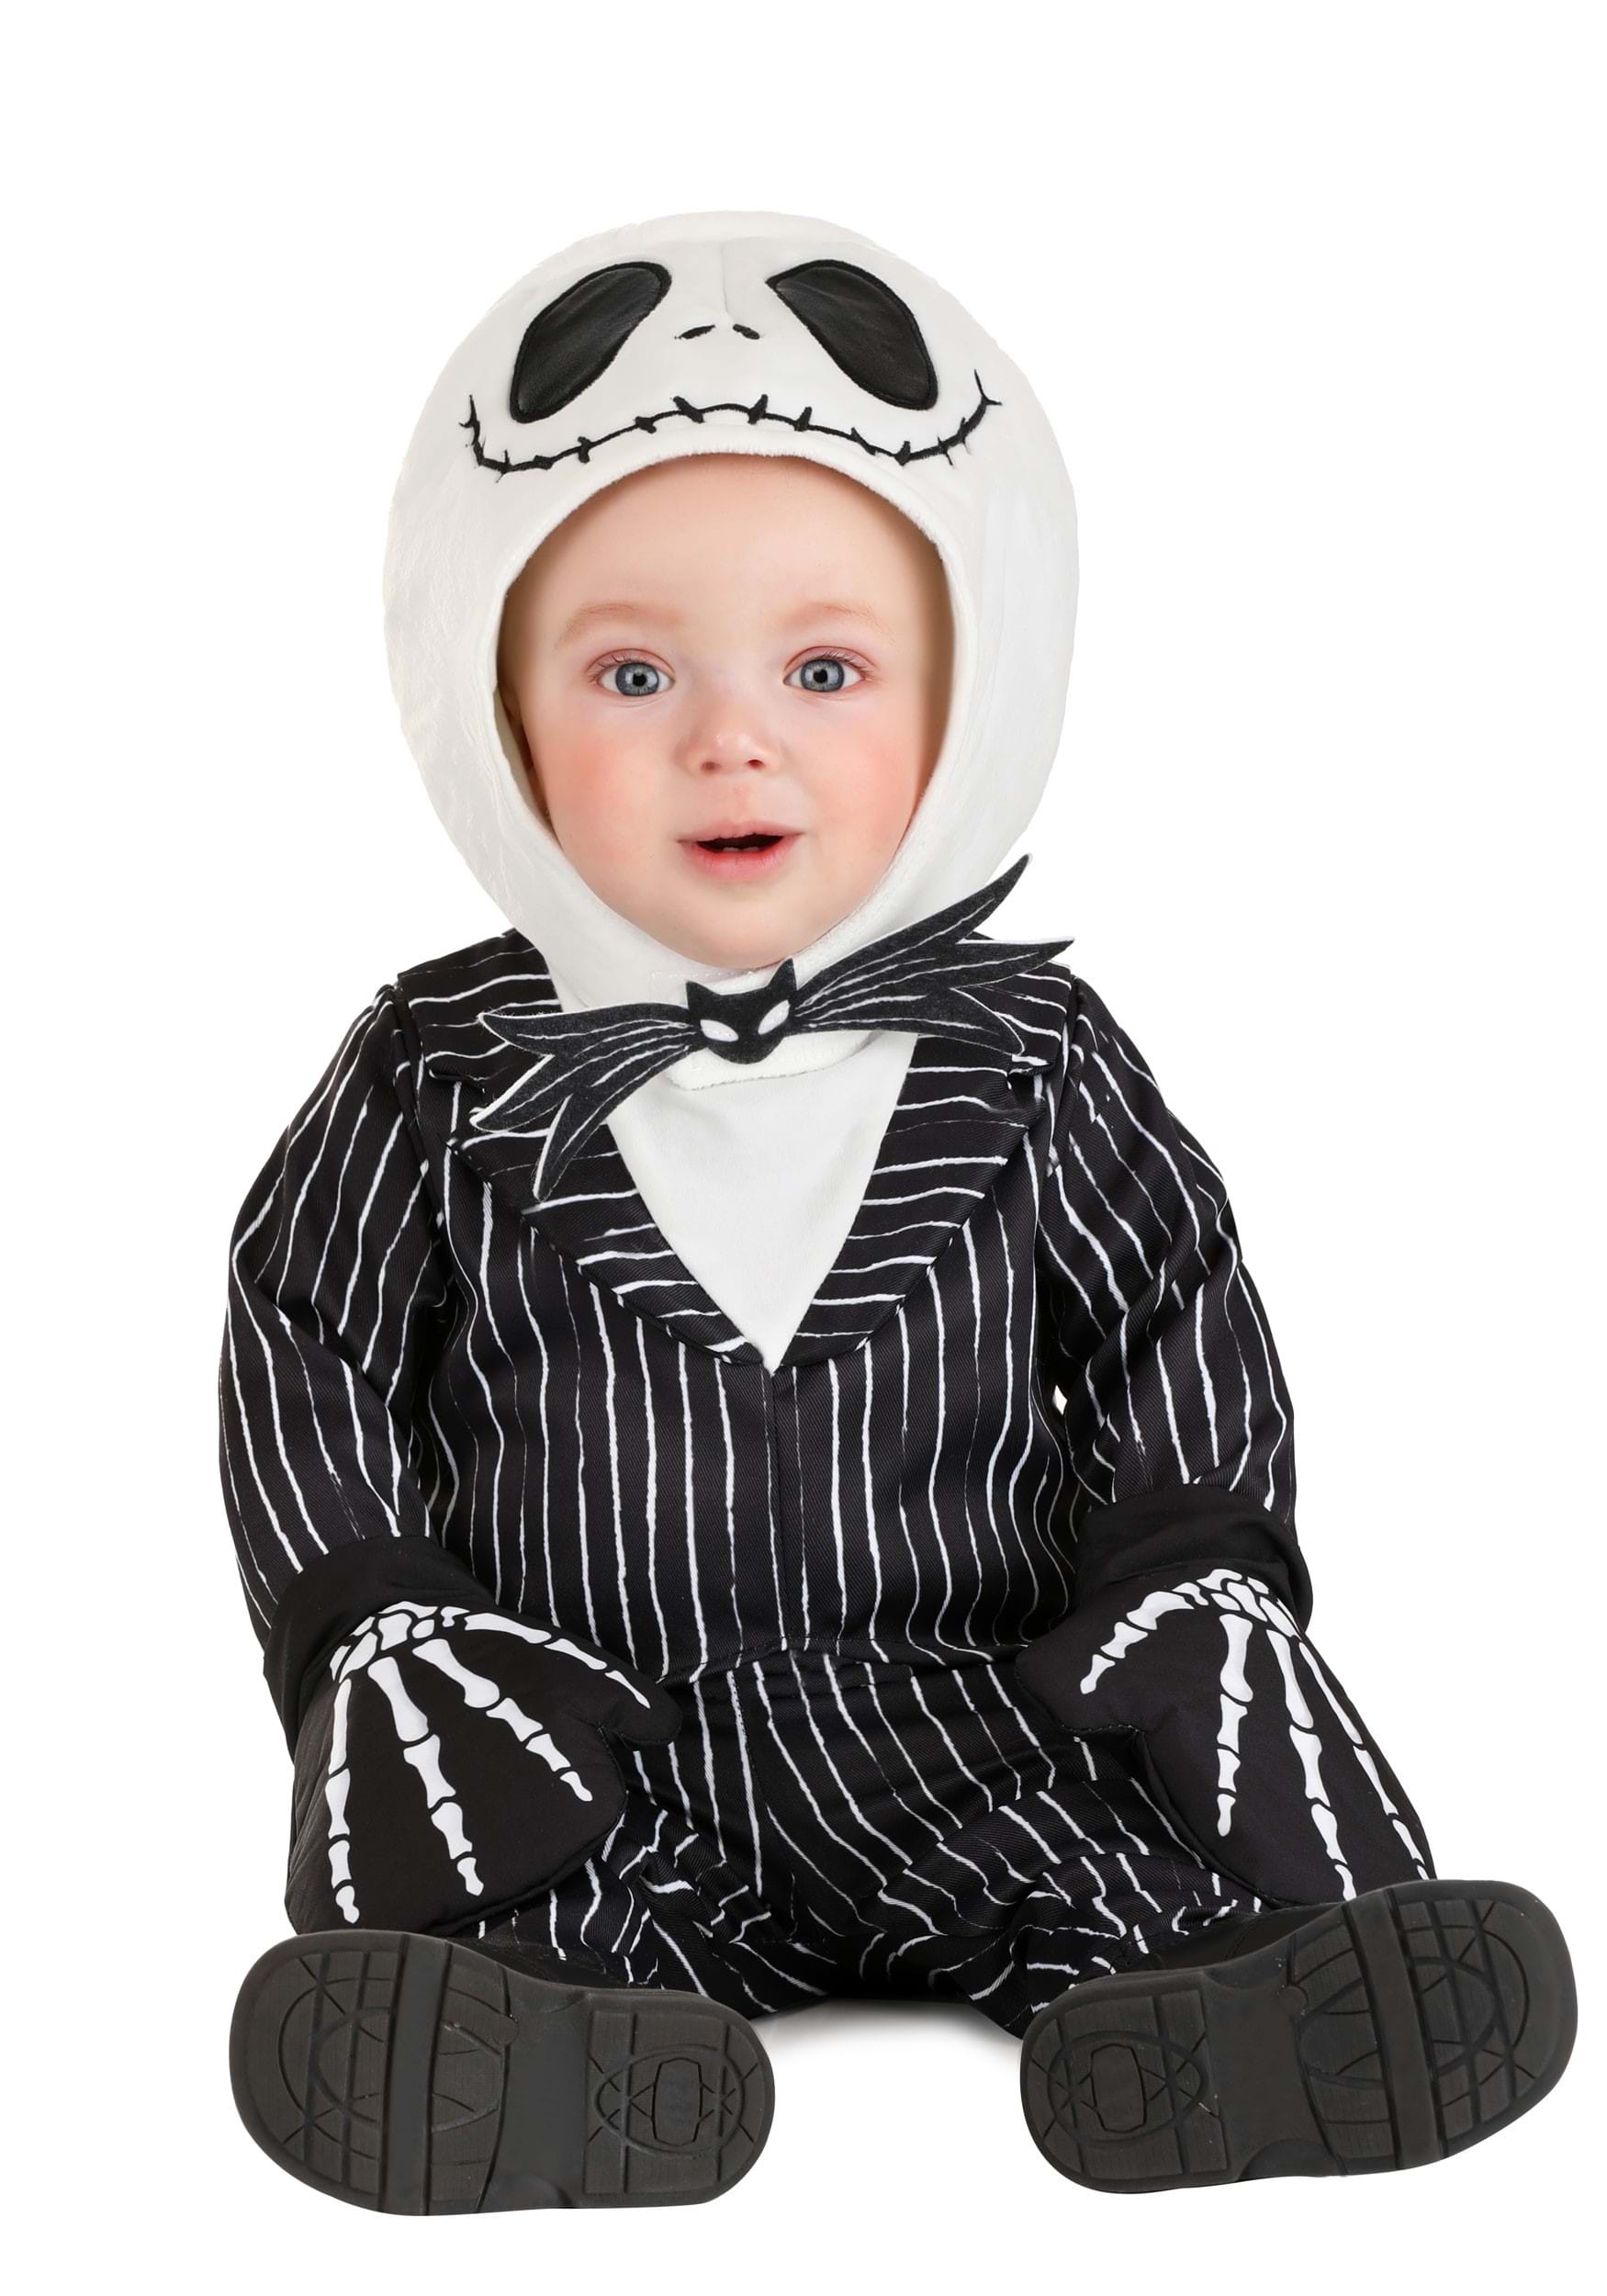 Photos - Fancy Dress Before FUN Costumes Jack Skellington Darling Infant Costume Black/White FUN33 